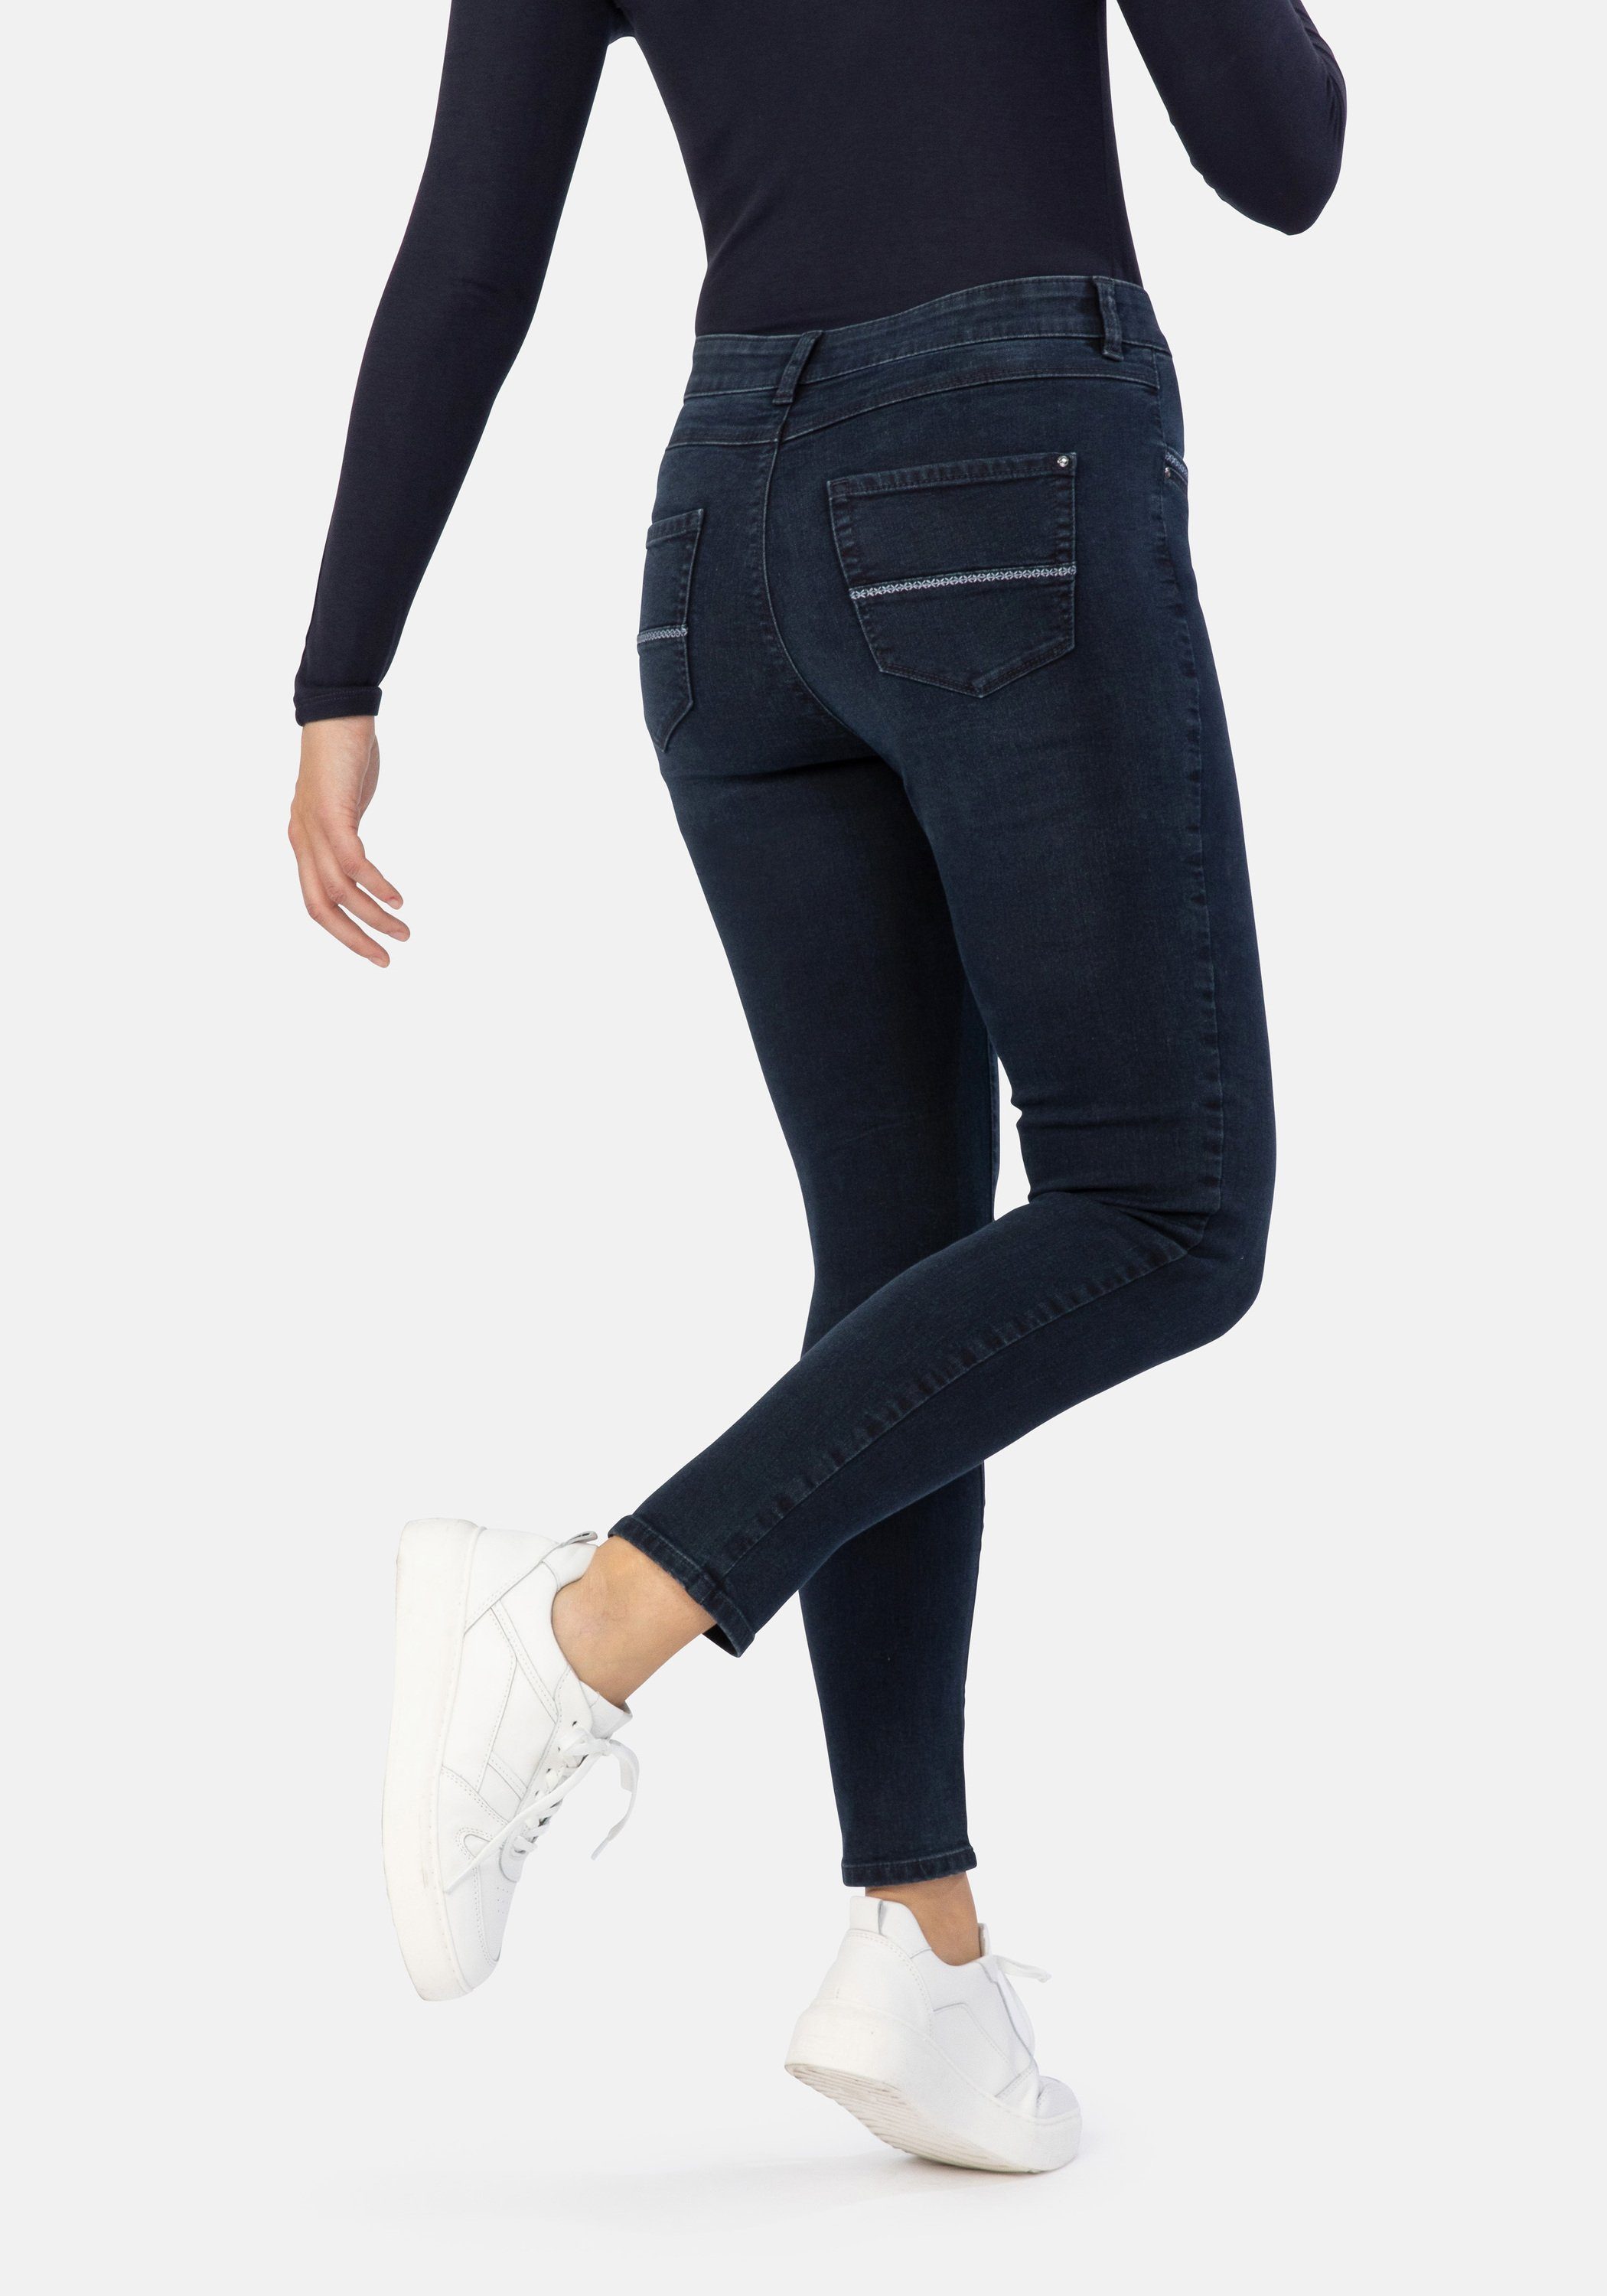 Fit 5-Pocket-Jeans Rio authentic WOMEN Fexxi Skinny Denim wash indigo STOOKER Move